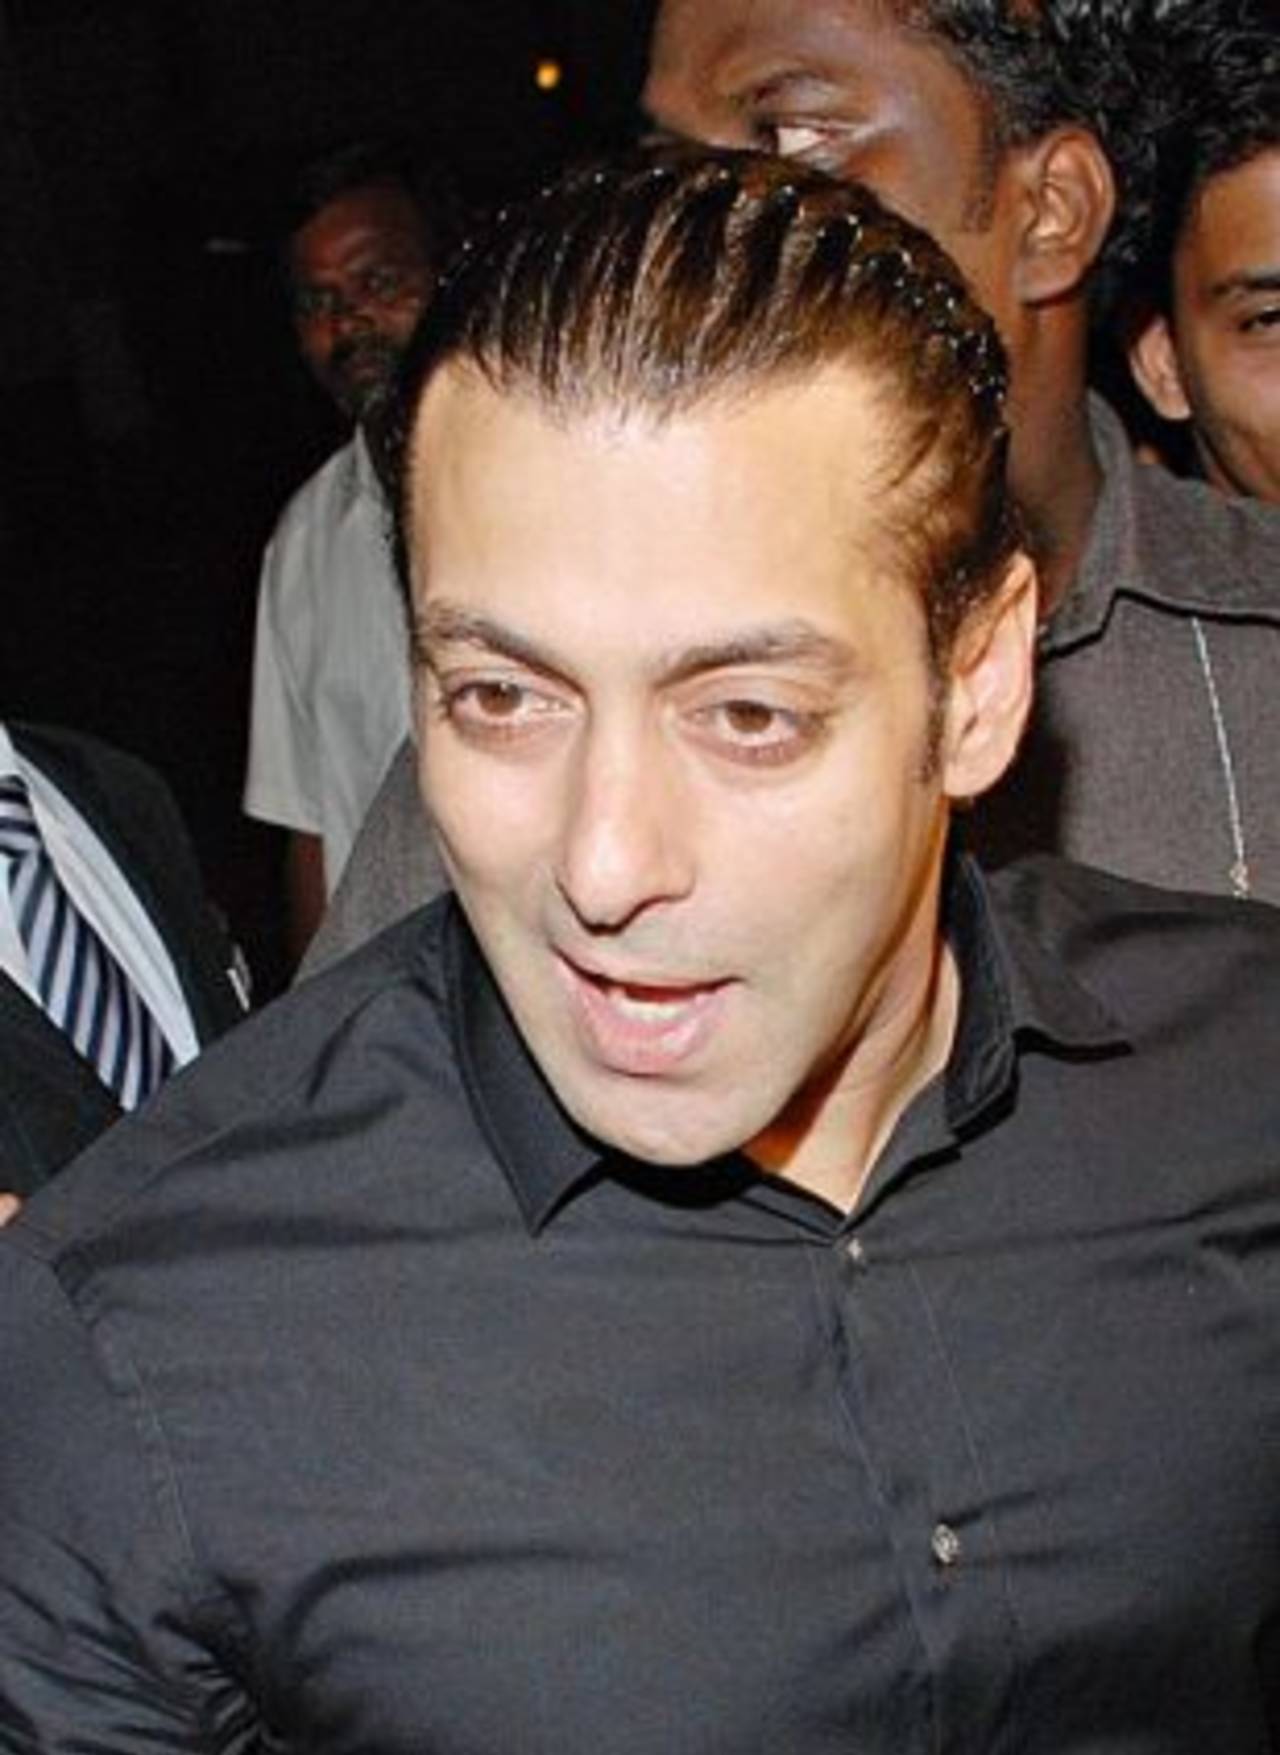 Bollywood actor Salman Khan will have to shell out big bucks if he wants an IPL  franchise&nbsp;&nbsp;&bull;&nbsp;&nbsp;AFP